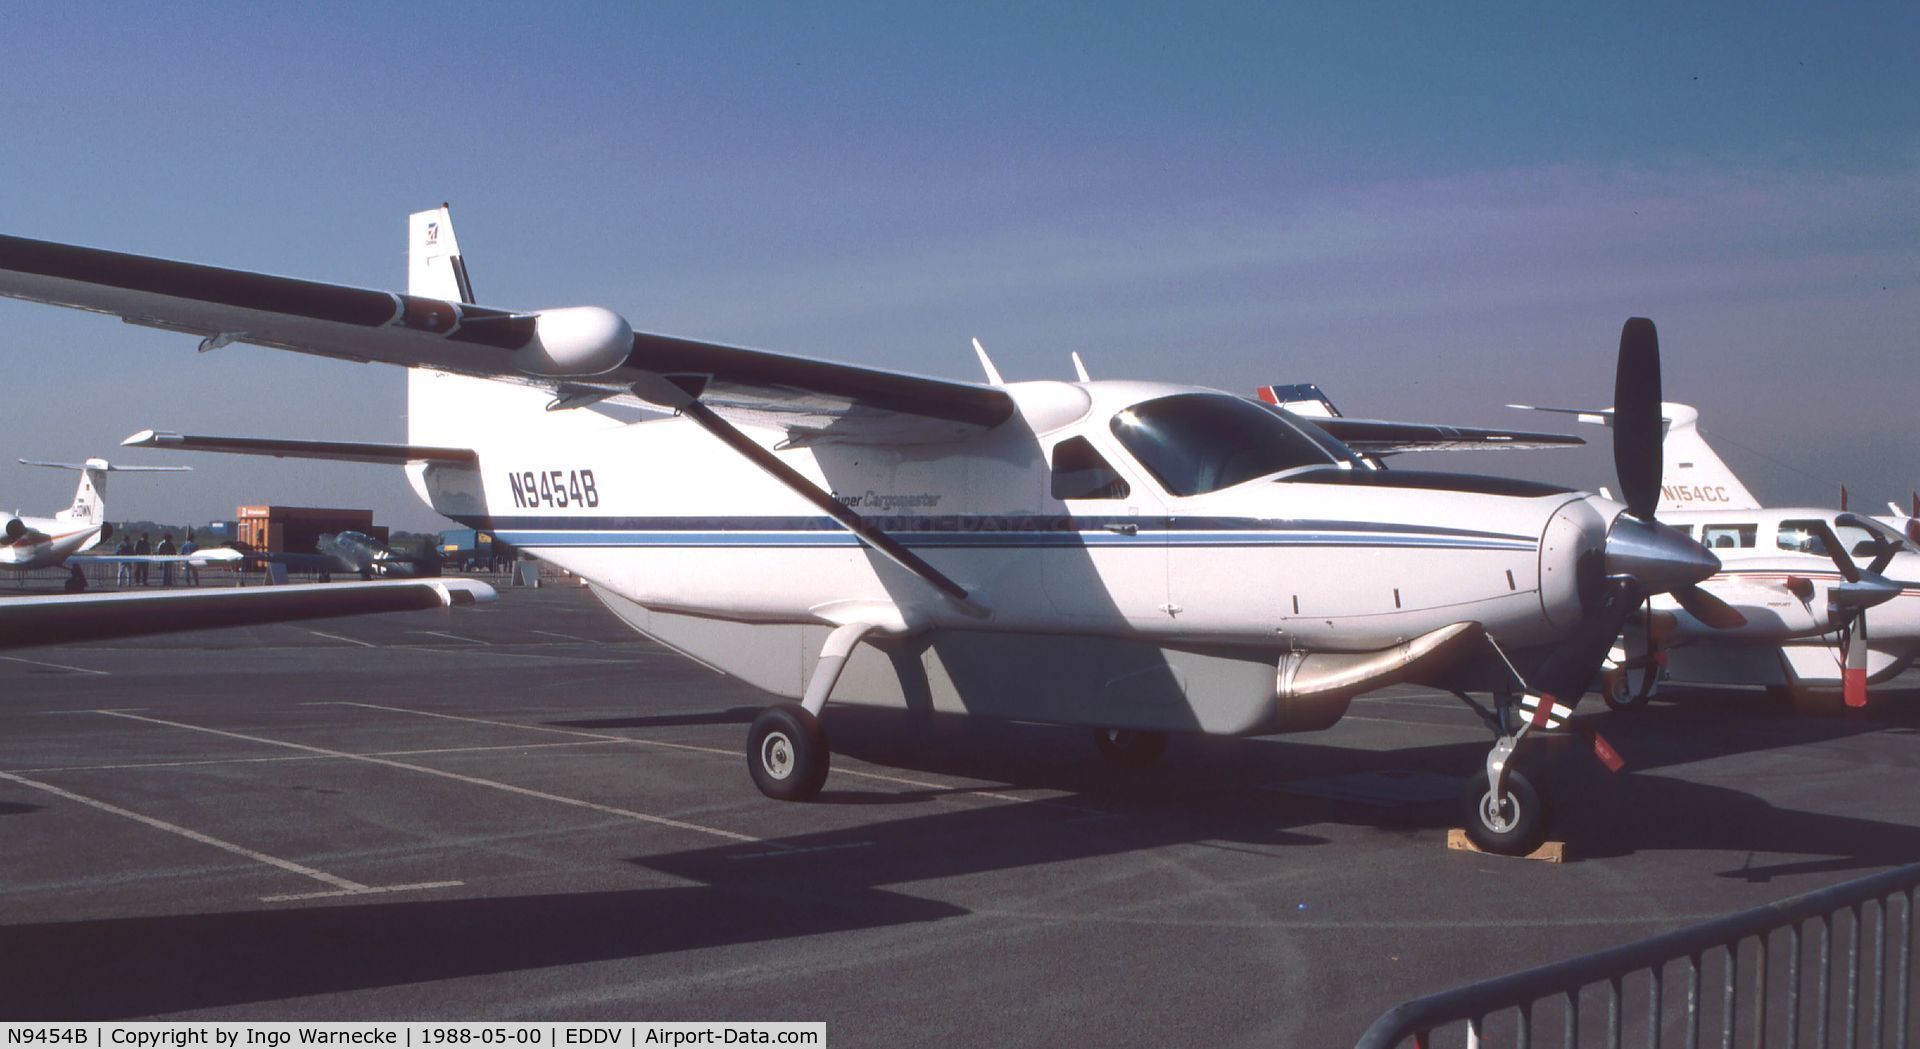 N9454B, 1988 Cessna 208B Grand Caravan C/N 208B0072, Cessna 208B Super Cargomaster at the ILA 1988, Hannover